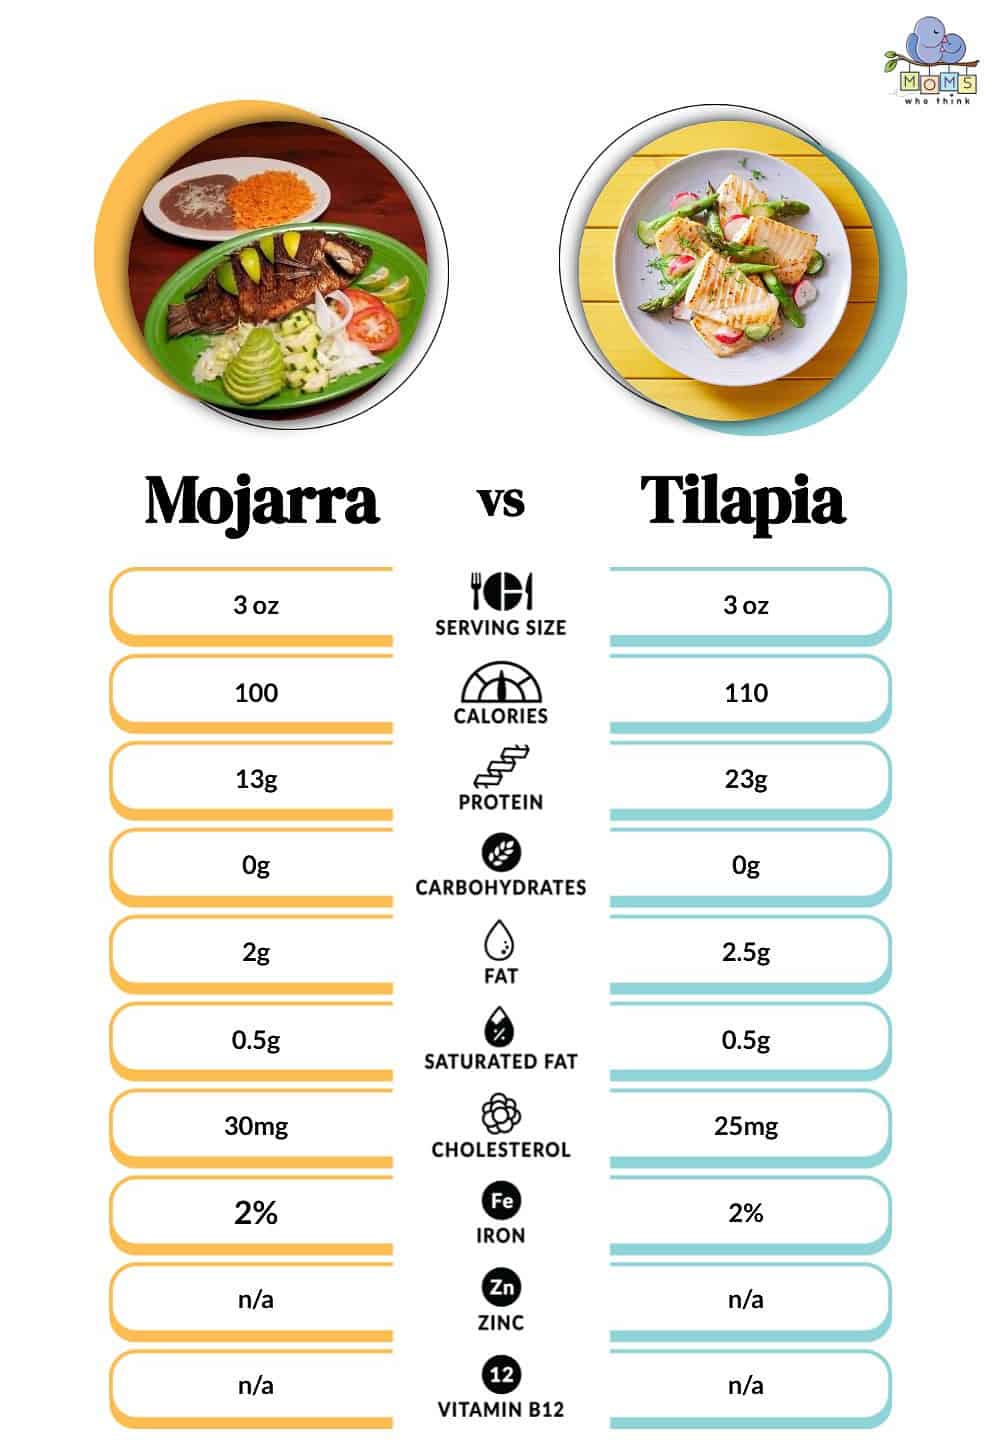 Mojarra vs Tilapia Nutritional Facts